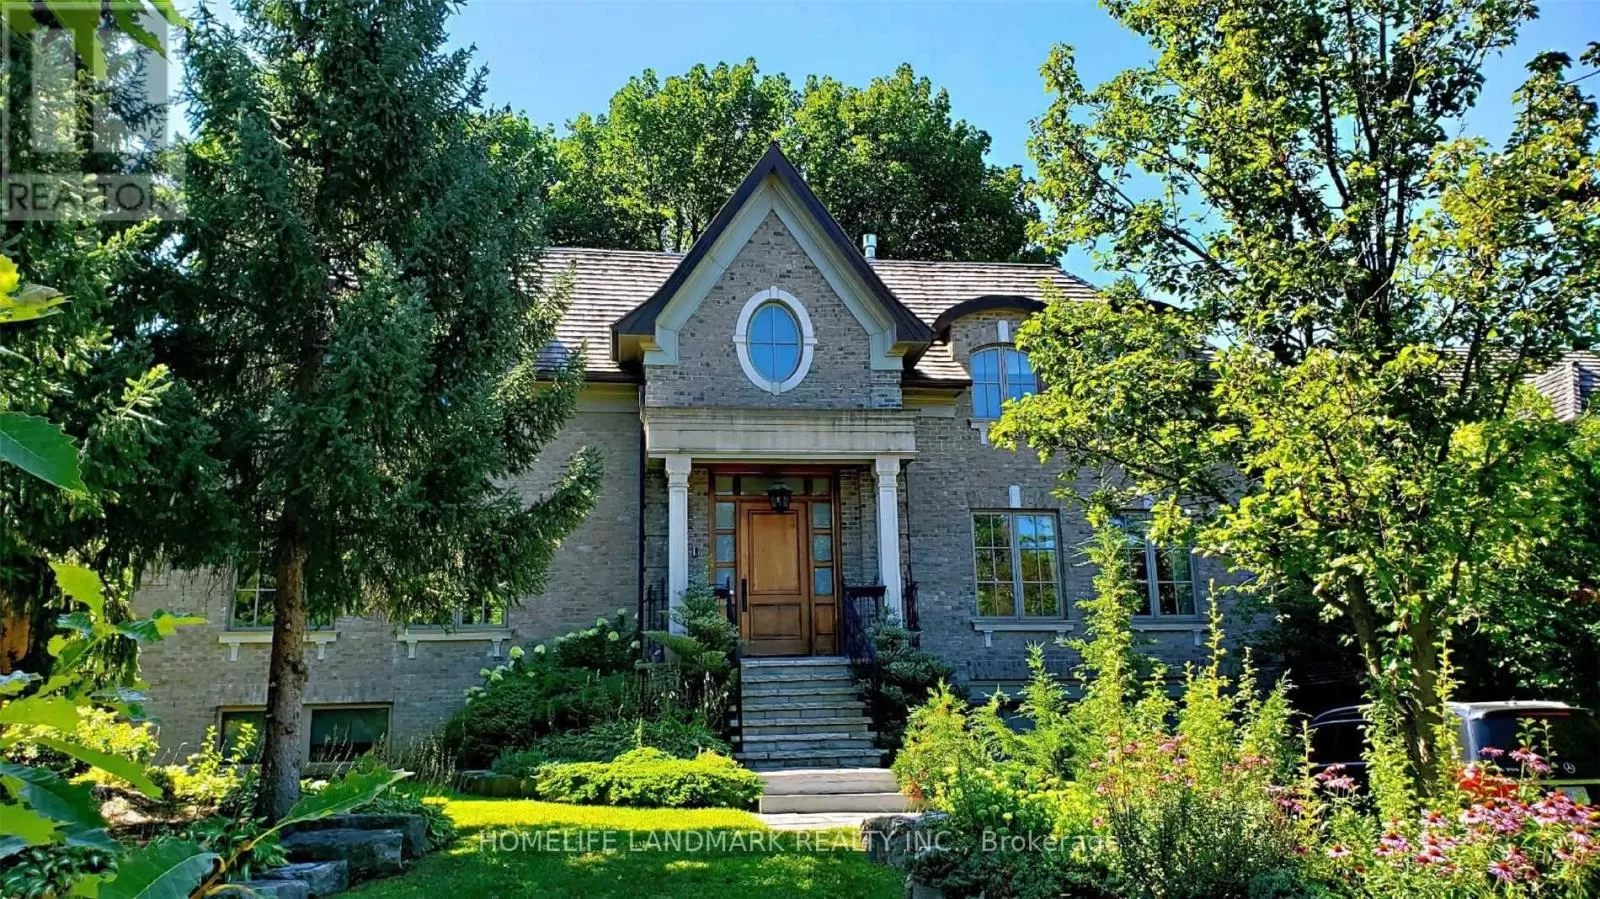 House for rent: 7 Glendarling Road, Toronto, Ontario M9A 4G3